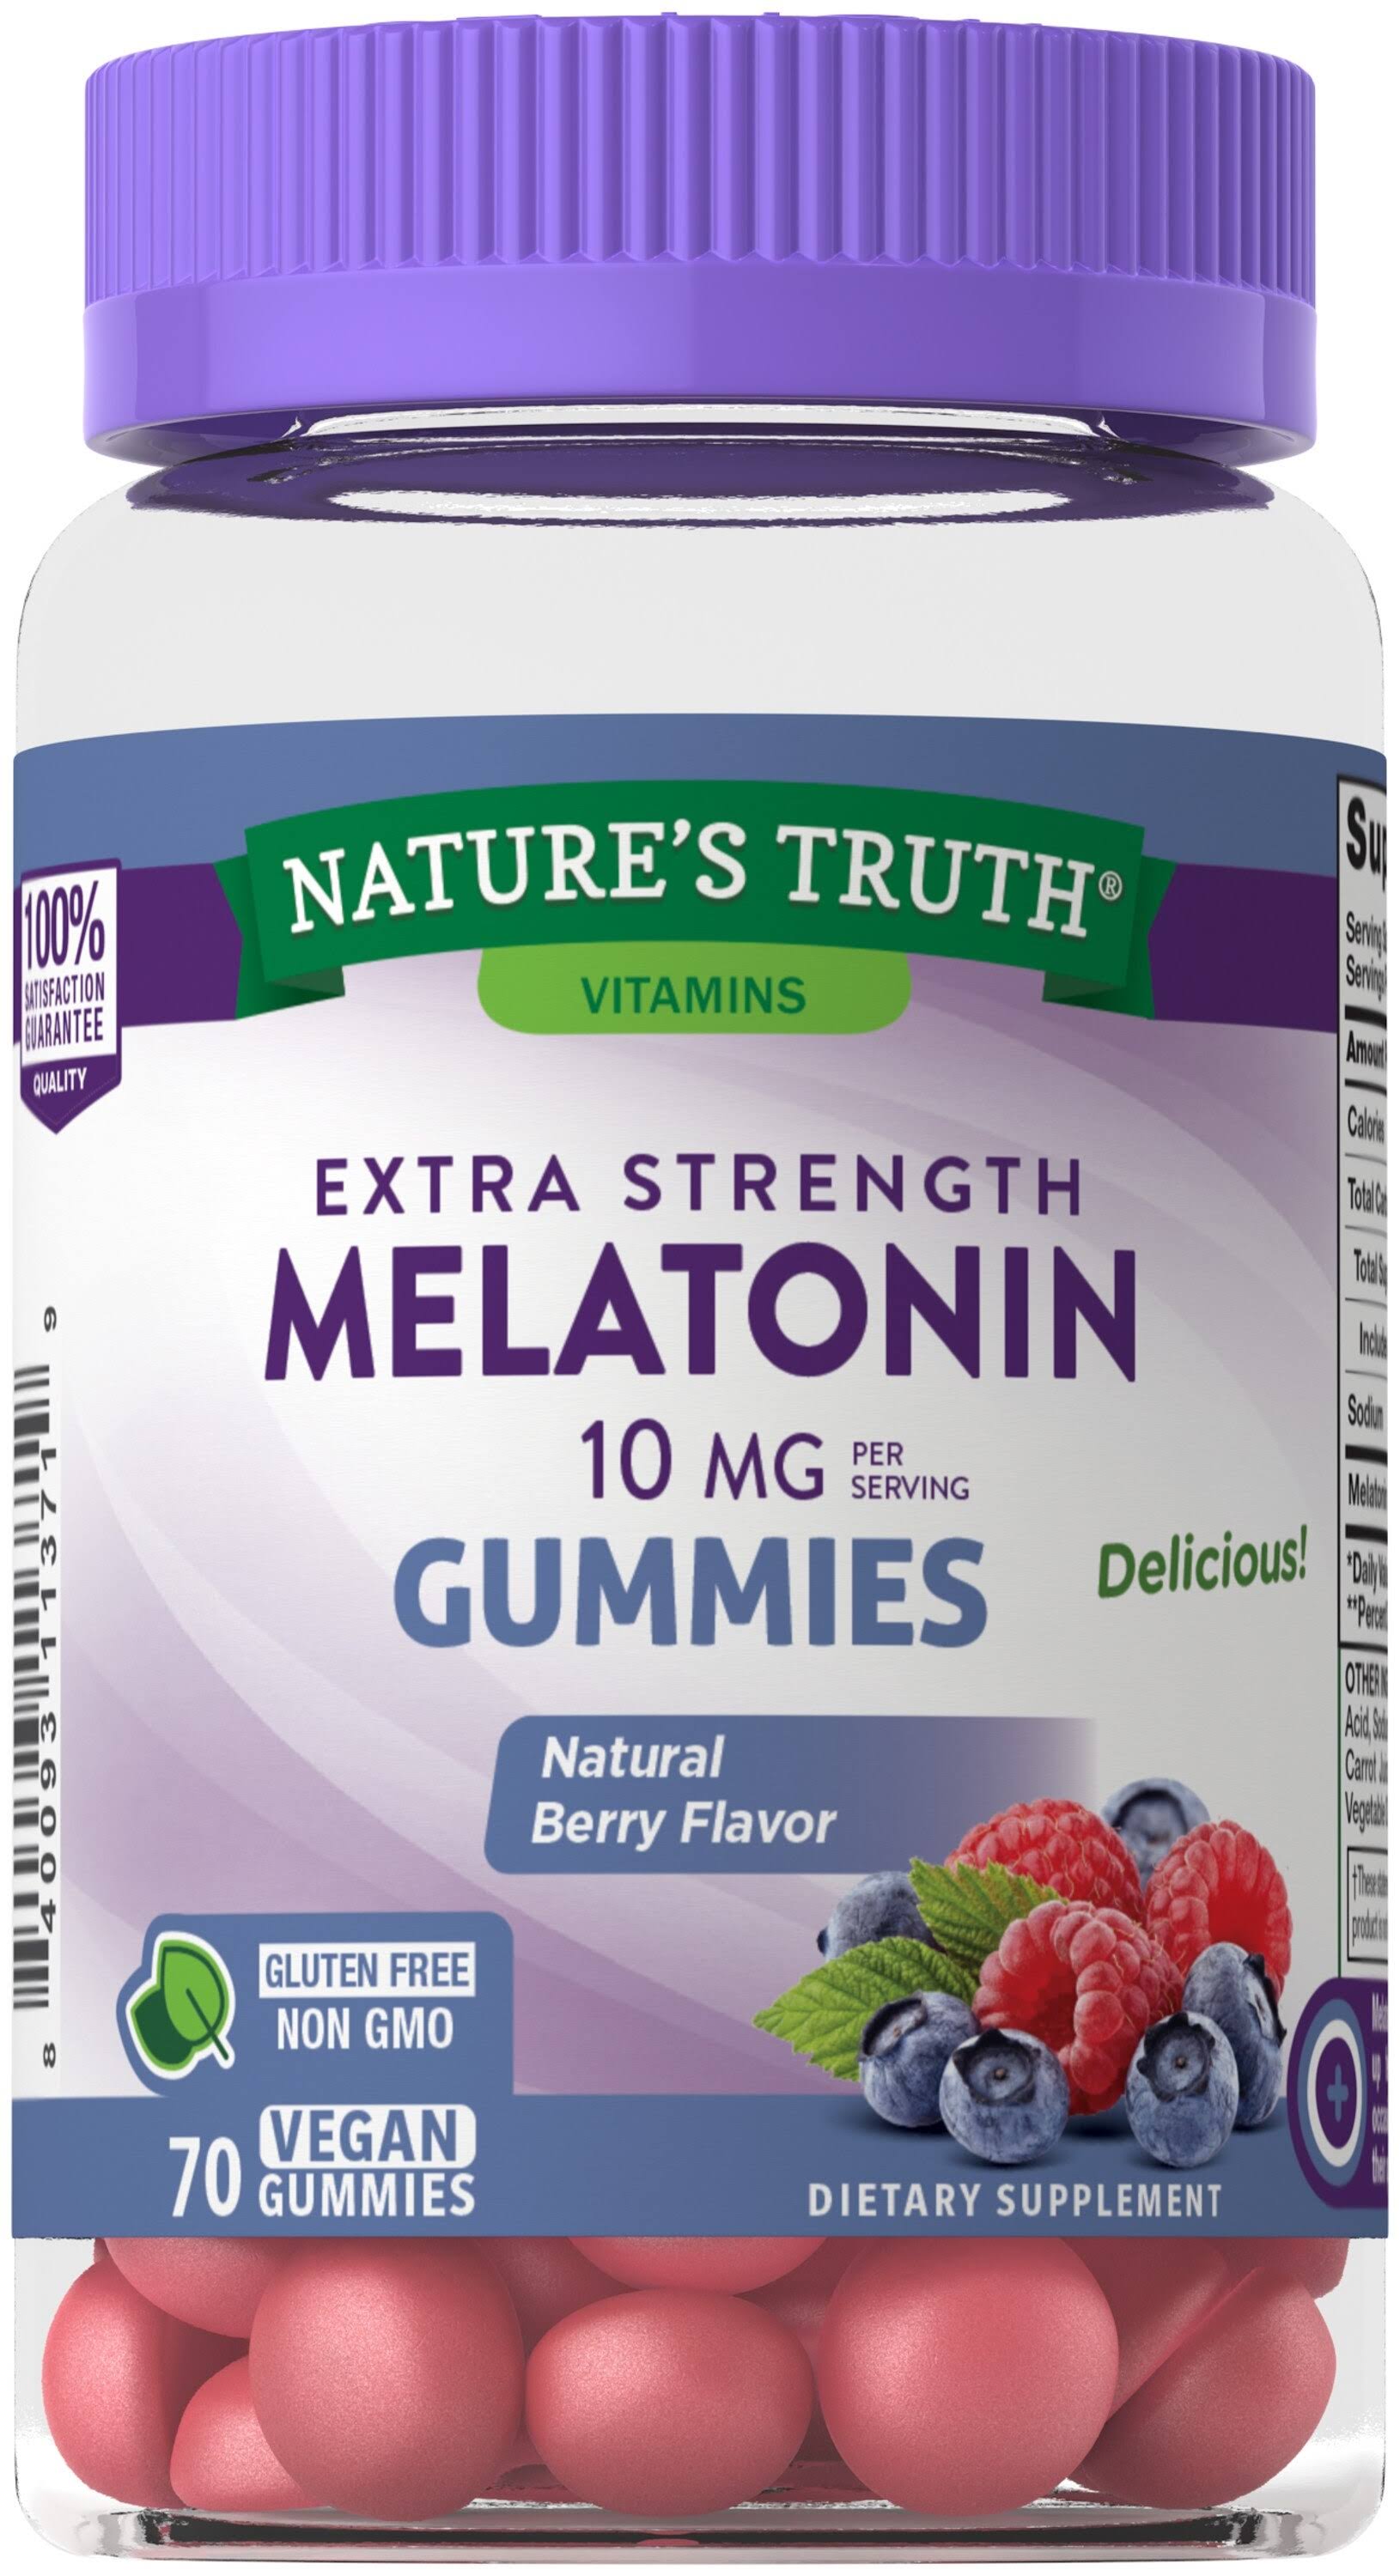 Nature's Truth Melatonin 10mg Vegan Gummies, 70 Count